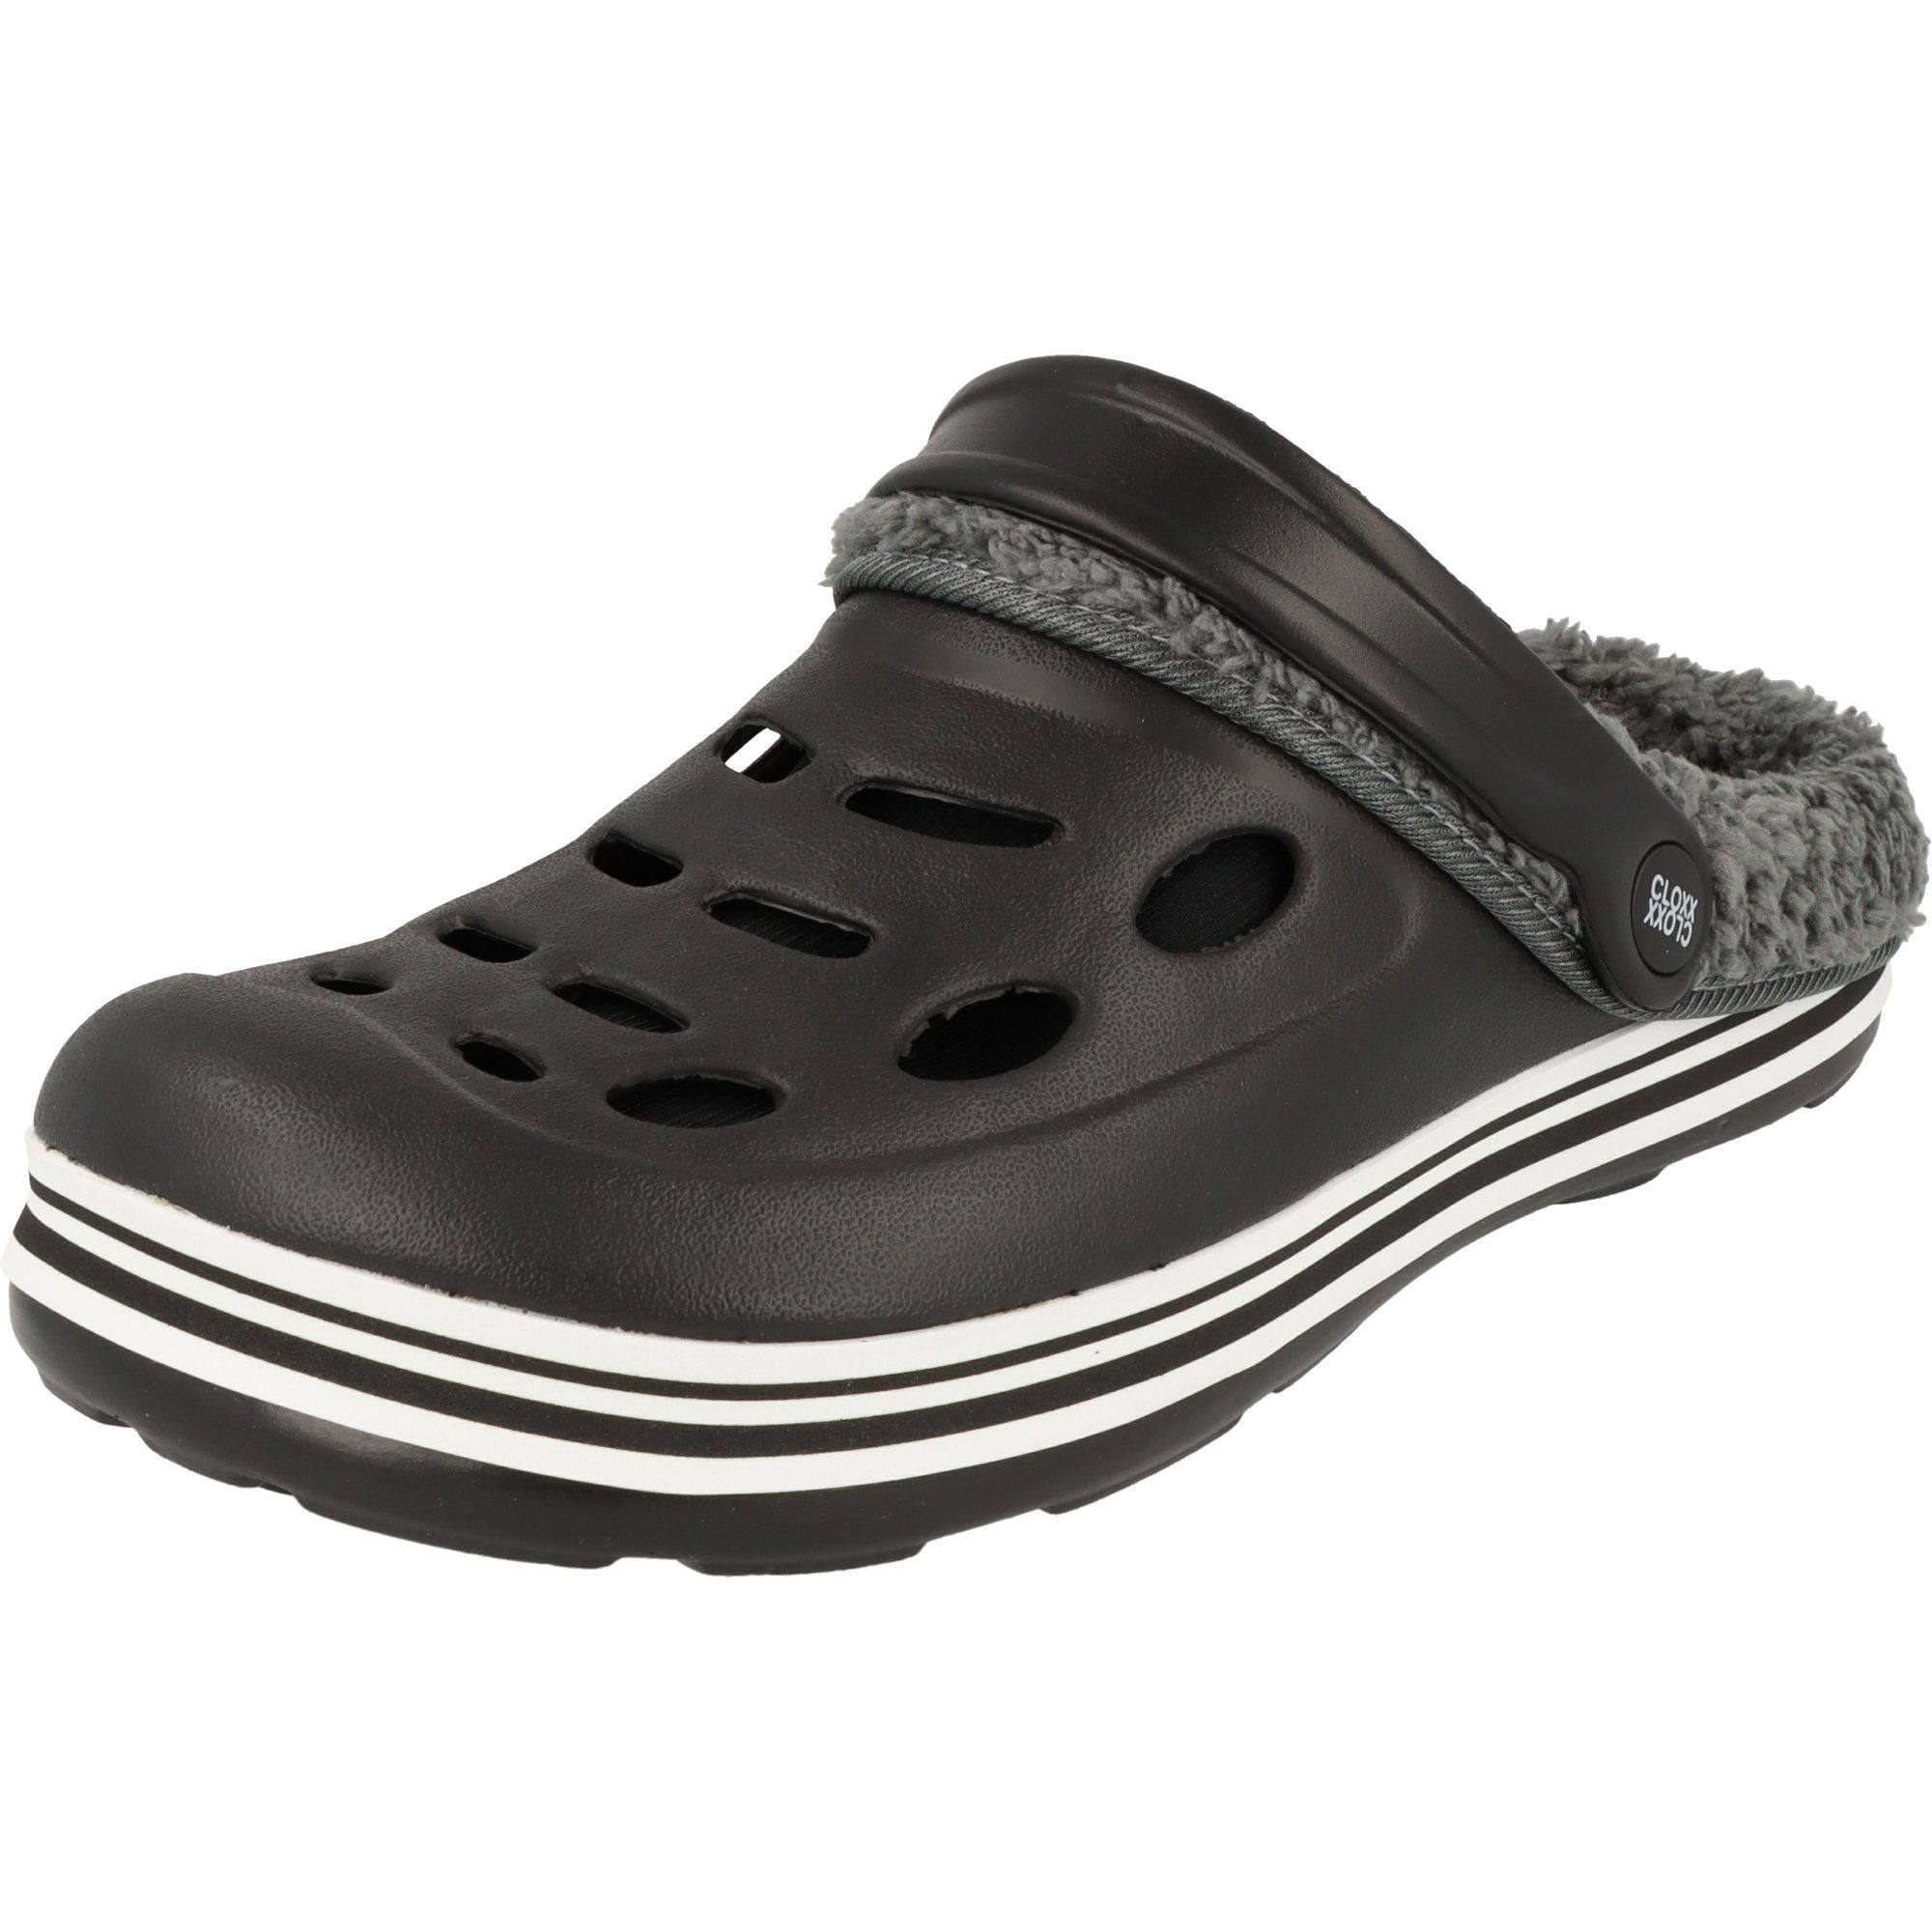 Cloxx »Unisex Schuhe R88520.87 Gummi Clogs Pantoletten Hausschuhe gefüttert  Black« Clog online kaufen | OTTO